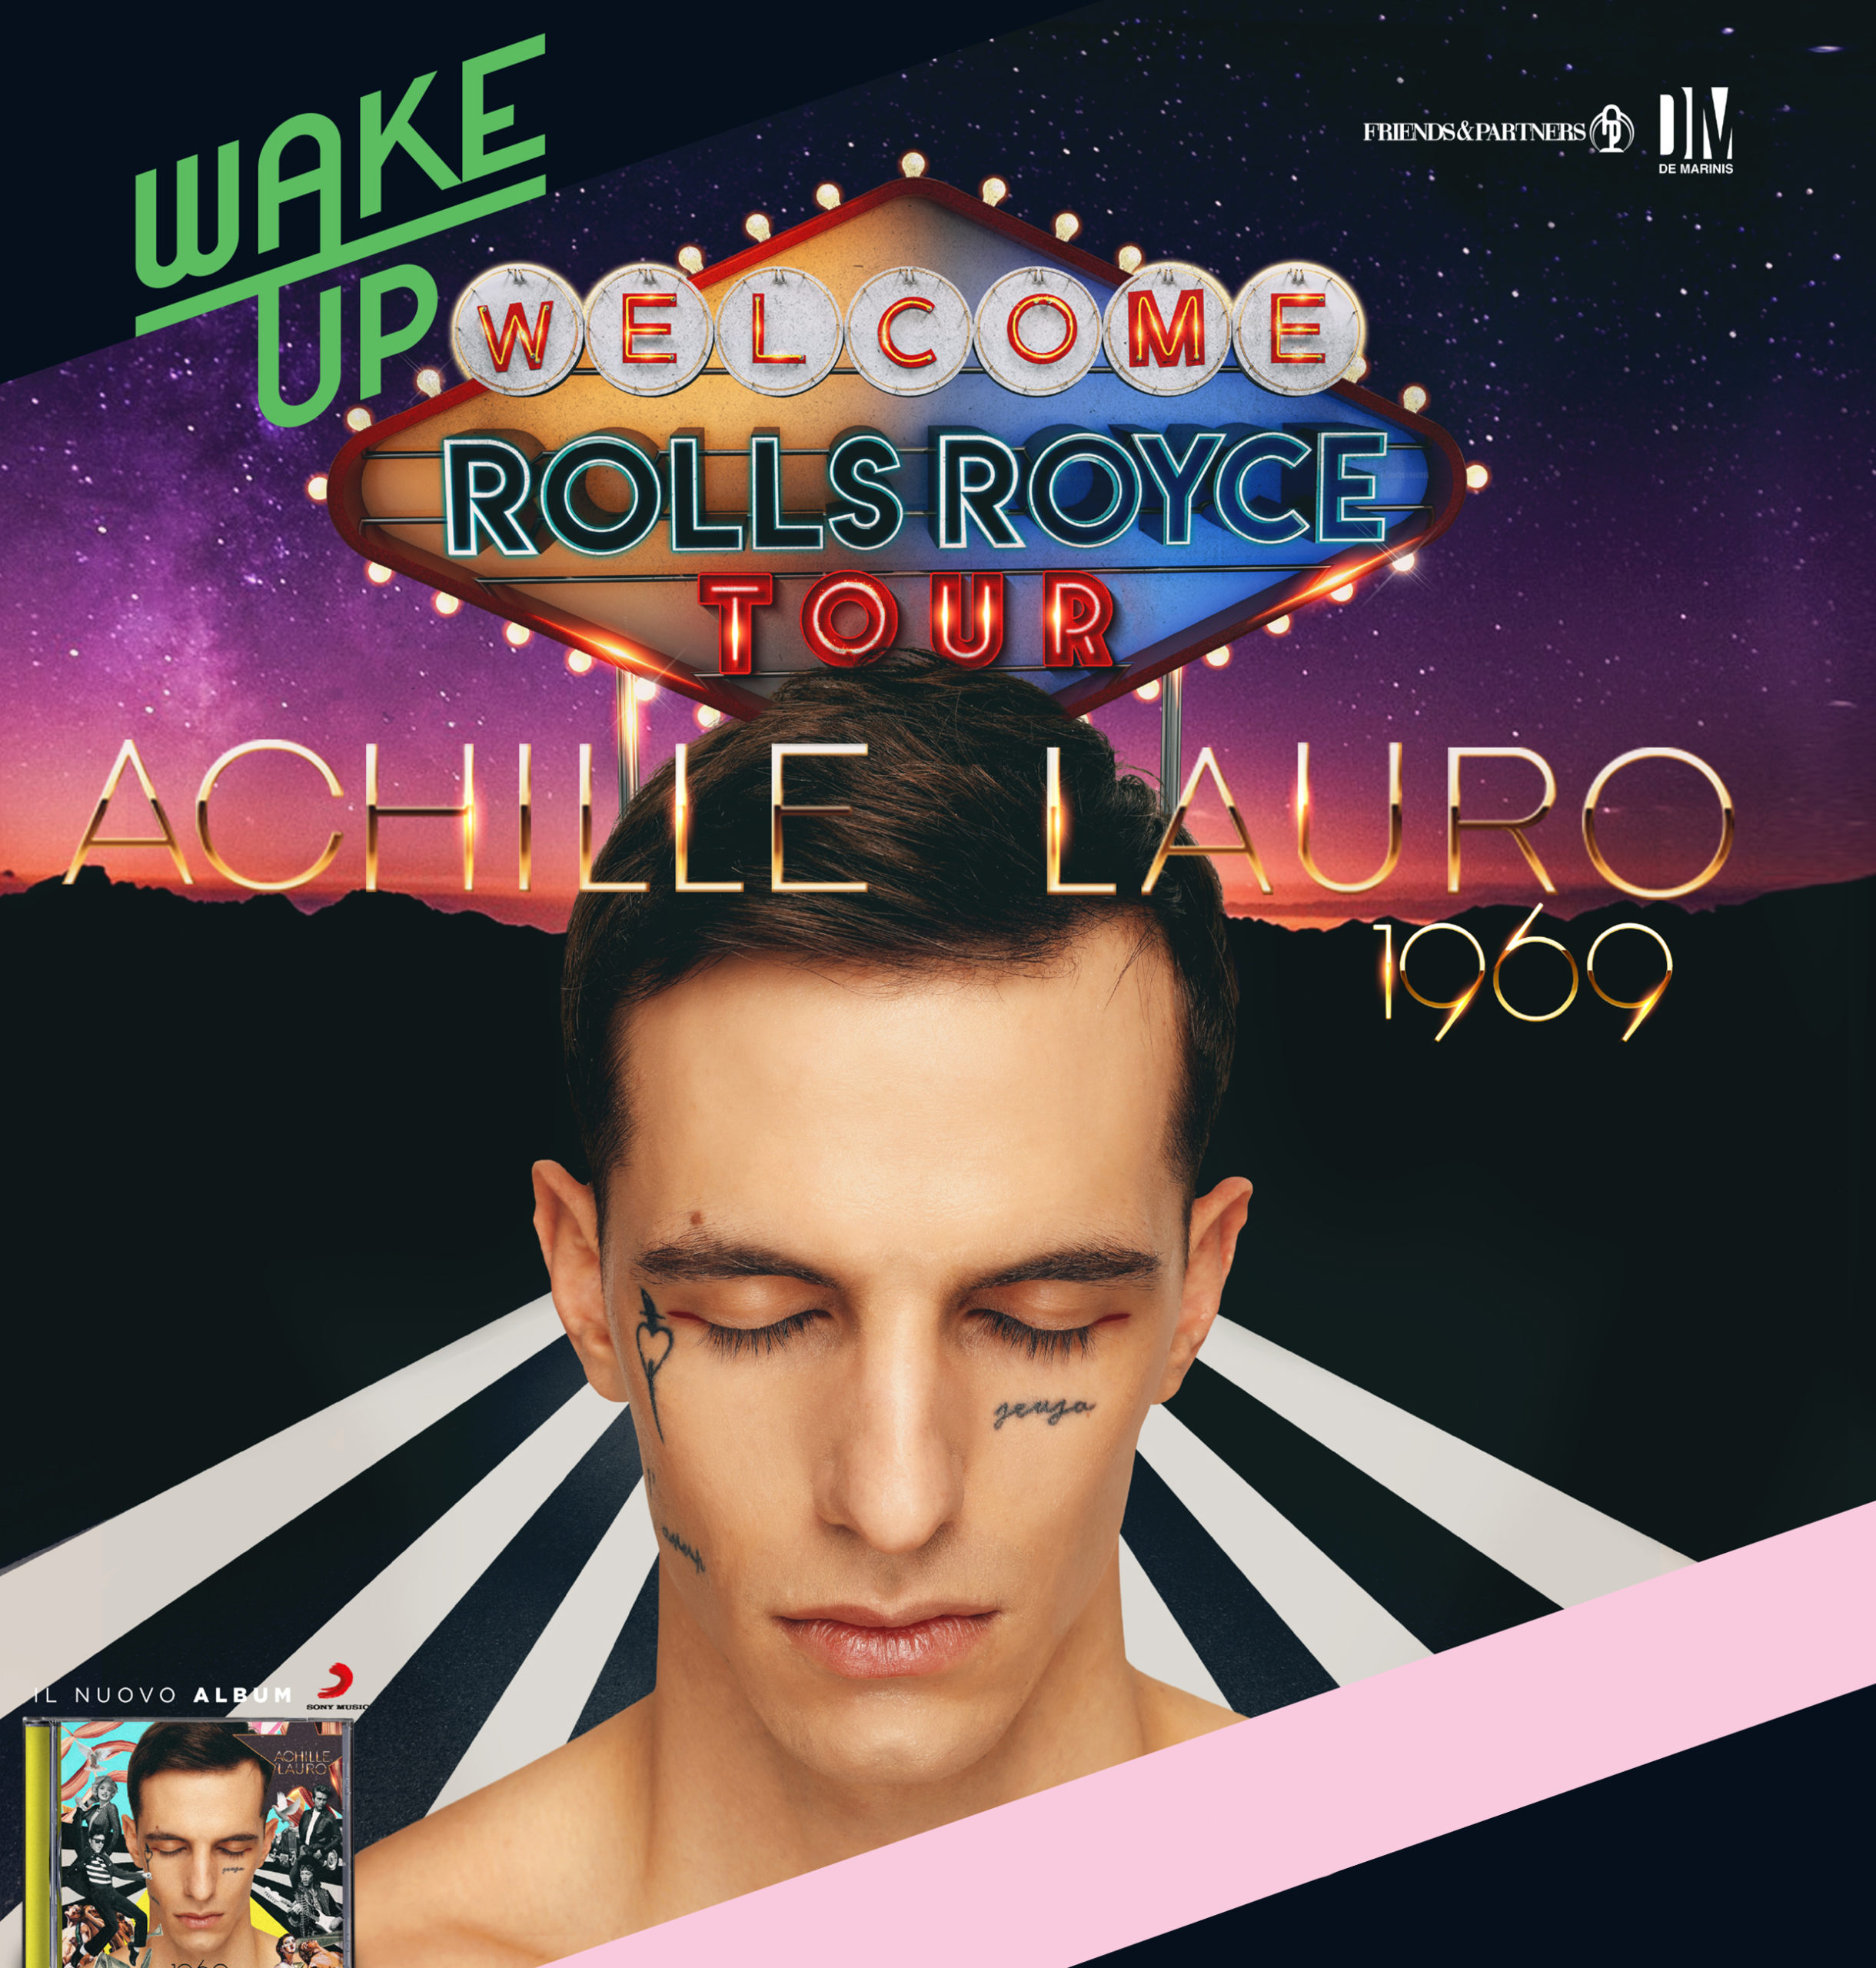 Wake Up - Edizione 2019